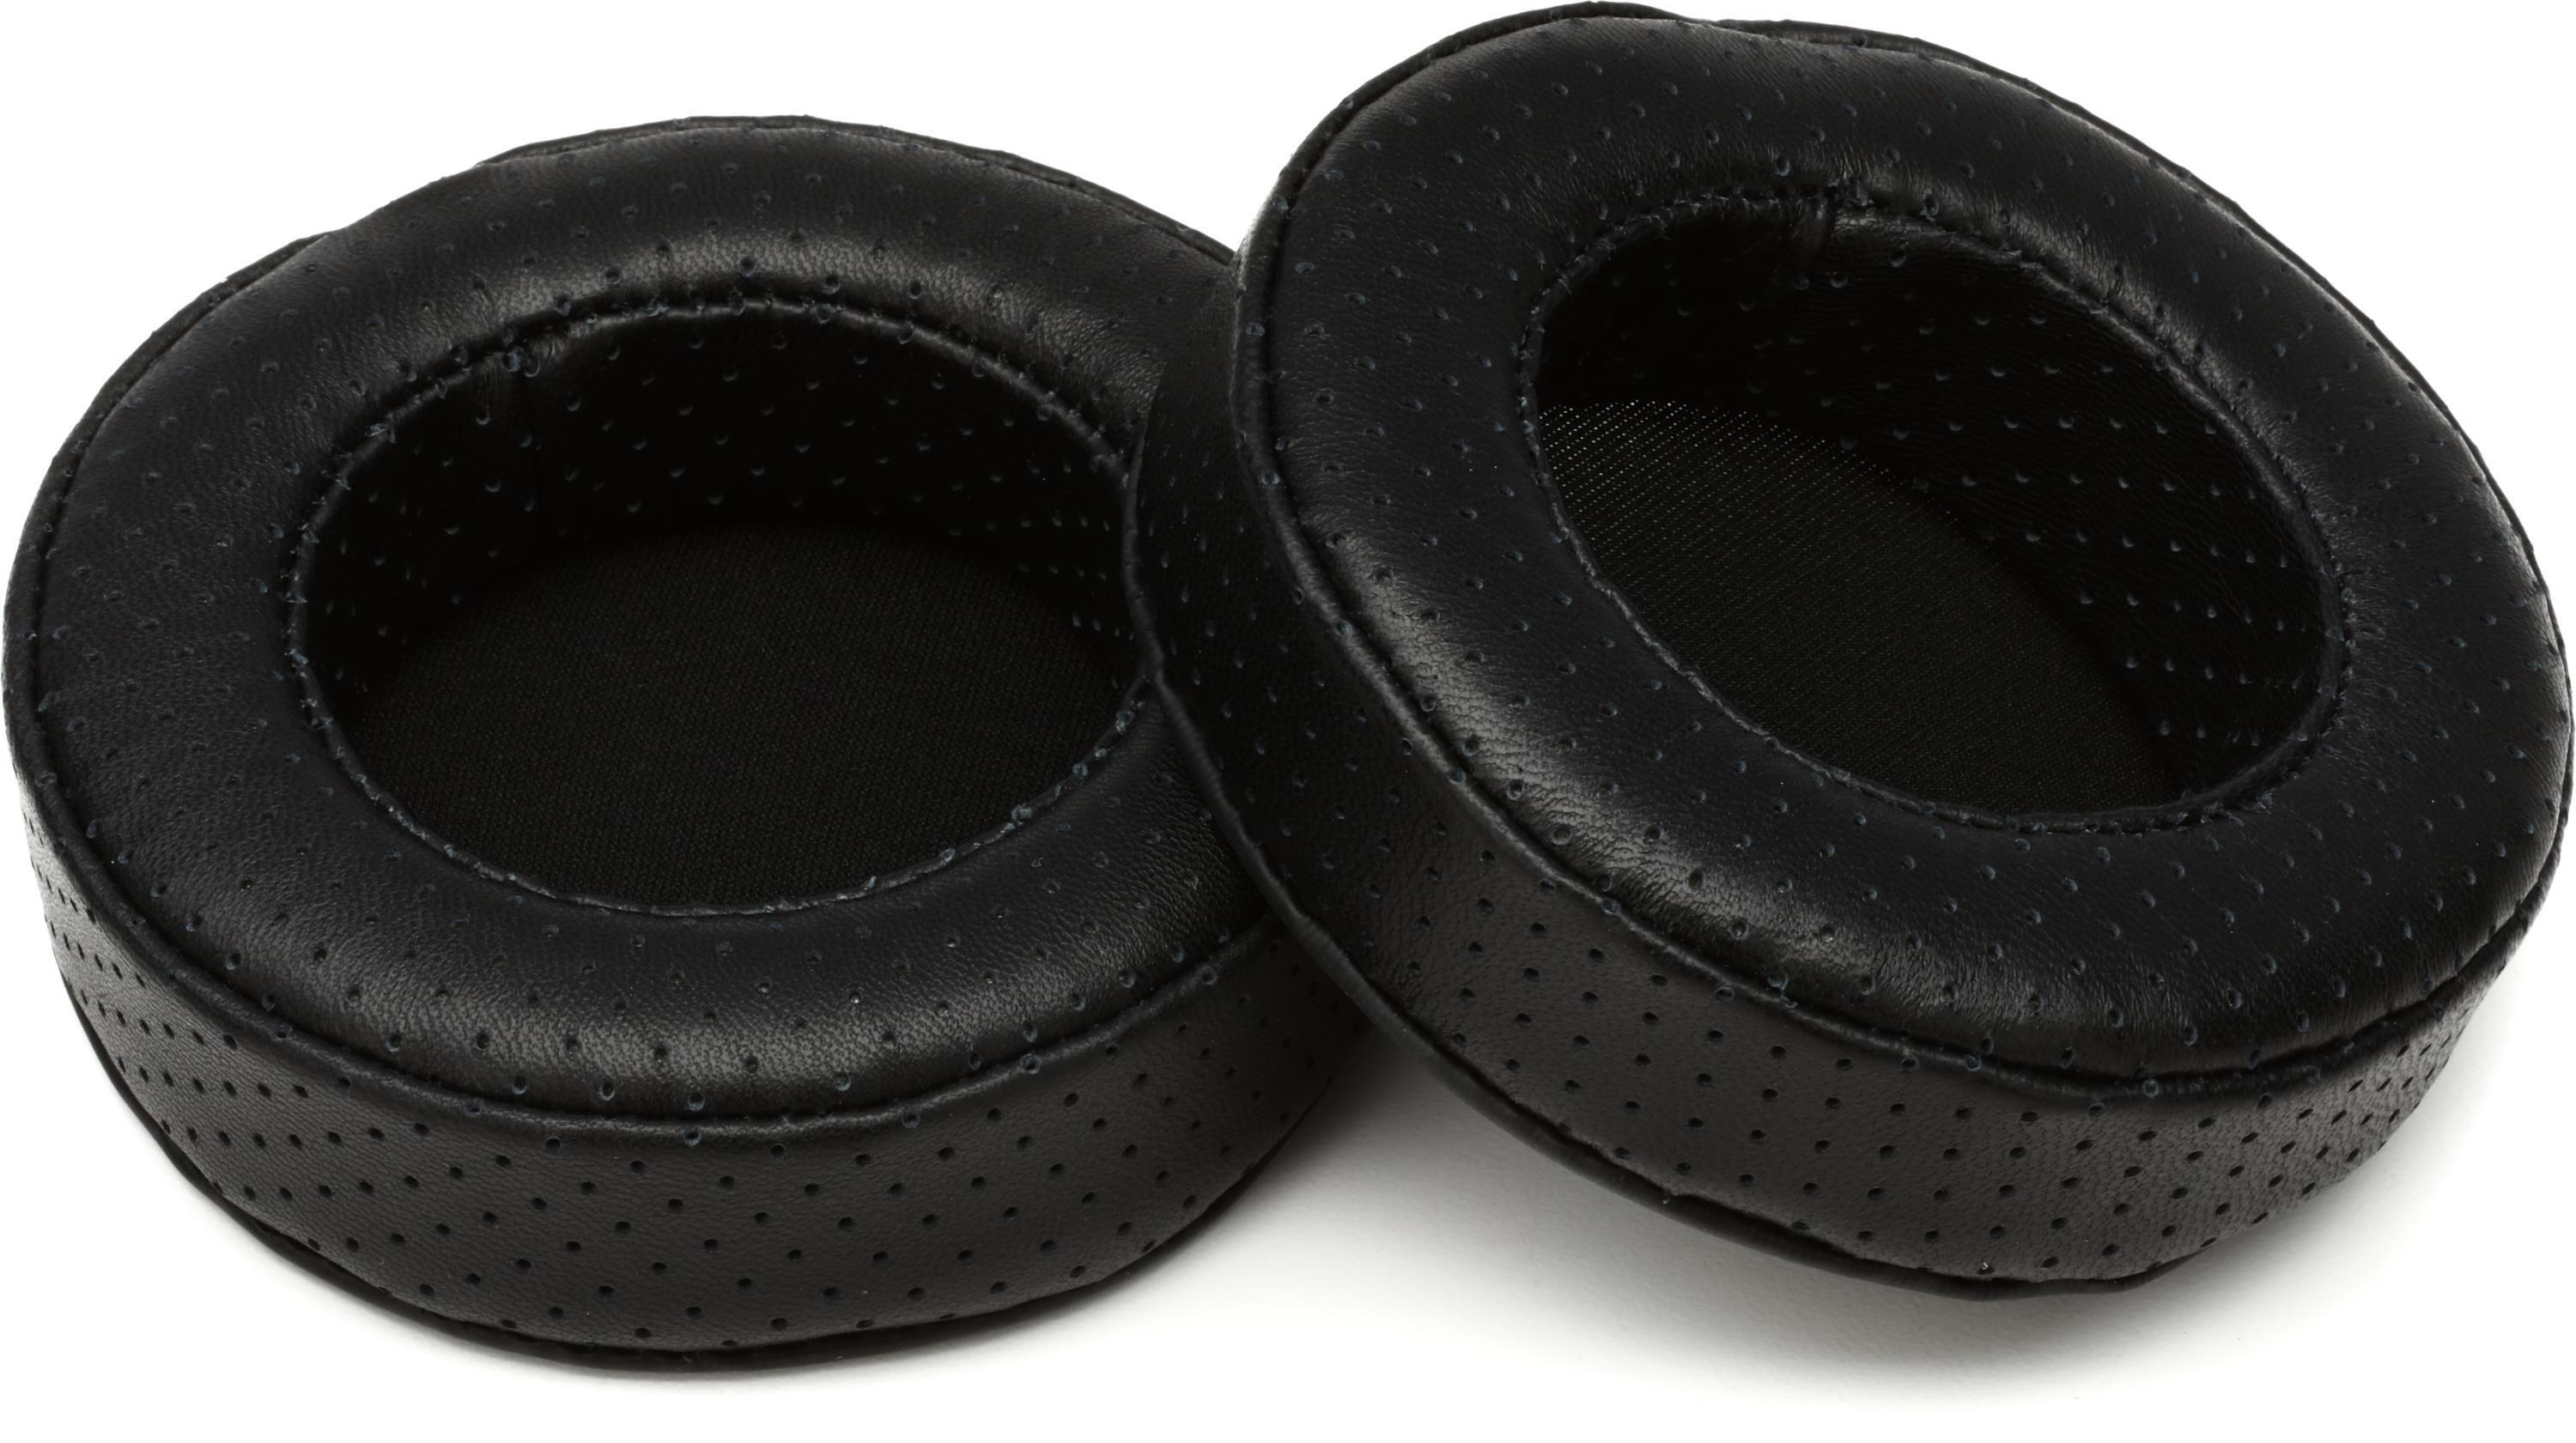 Elite Sheepskin Replacement Ear Pads for Sennheiser HD600 Series Headphones